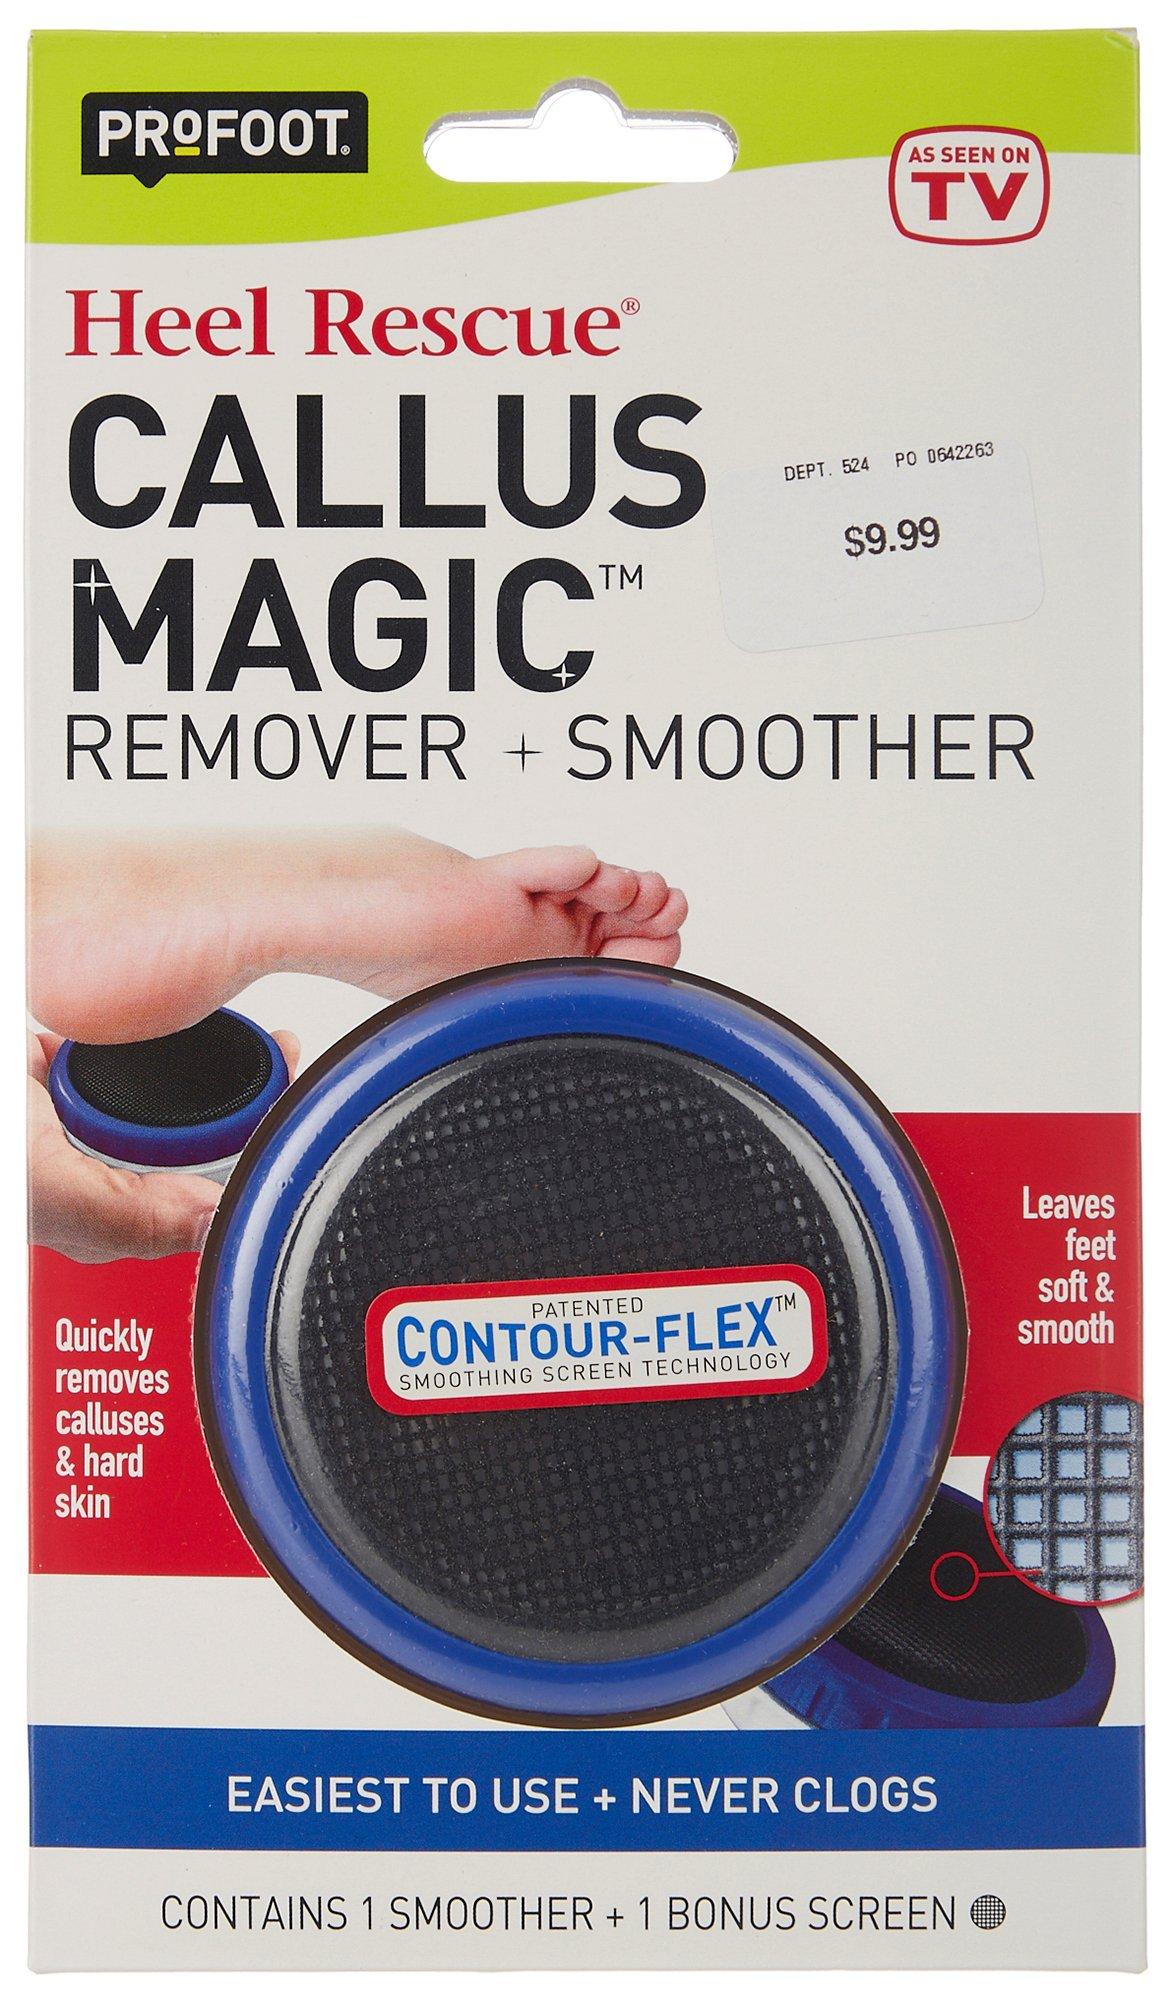 Heel Rescue Callus Magic Remover & Smoother